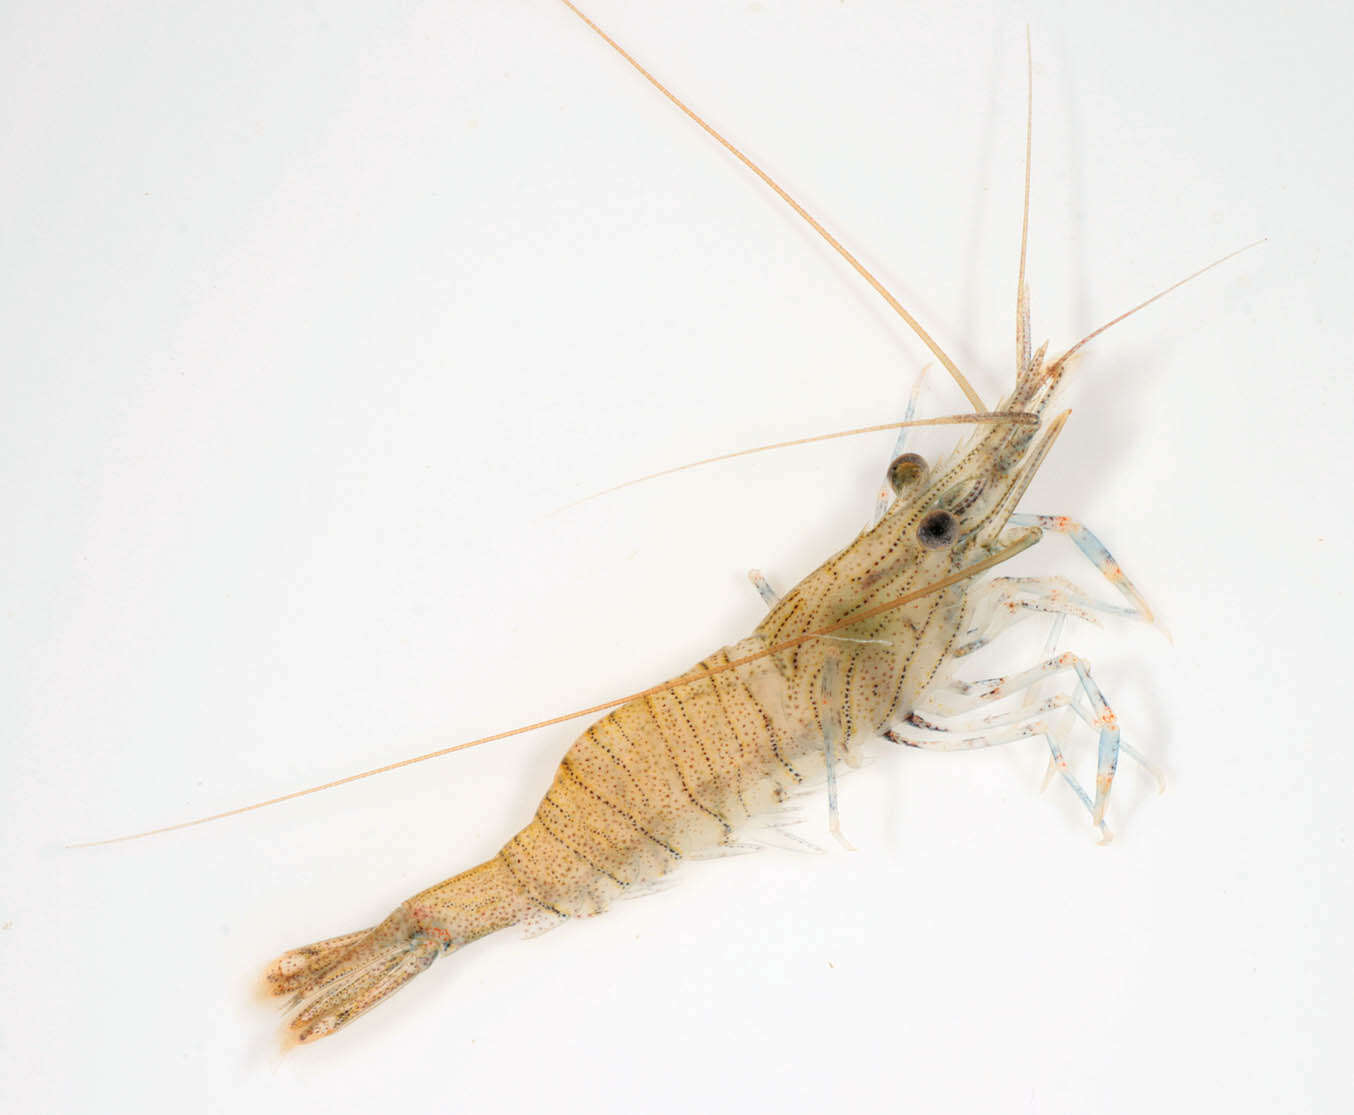 Image of Common prawn